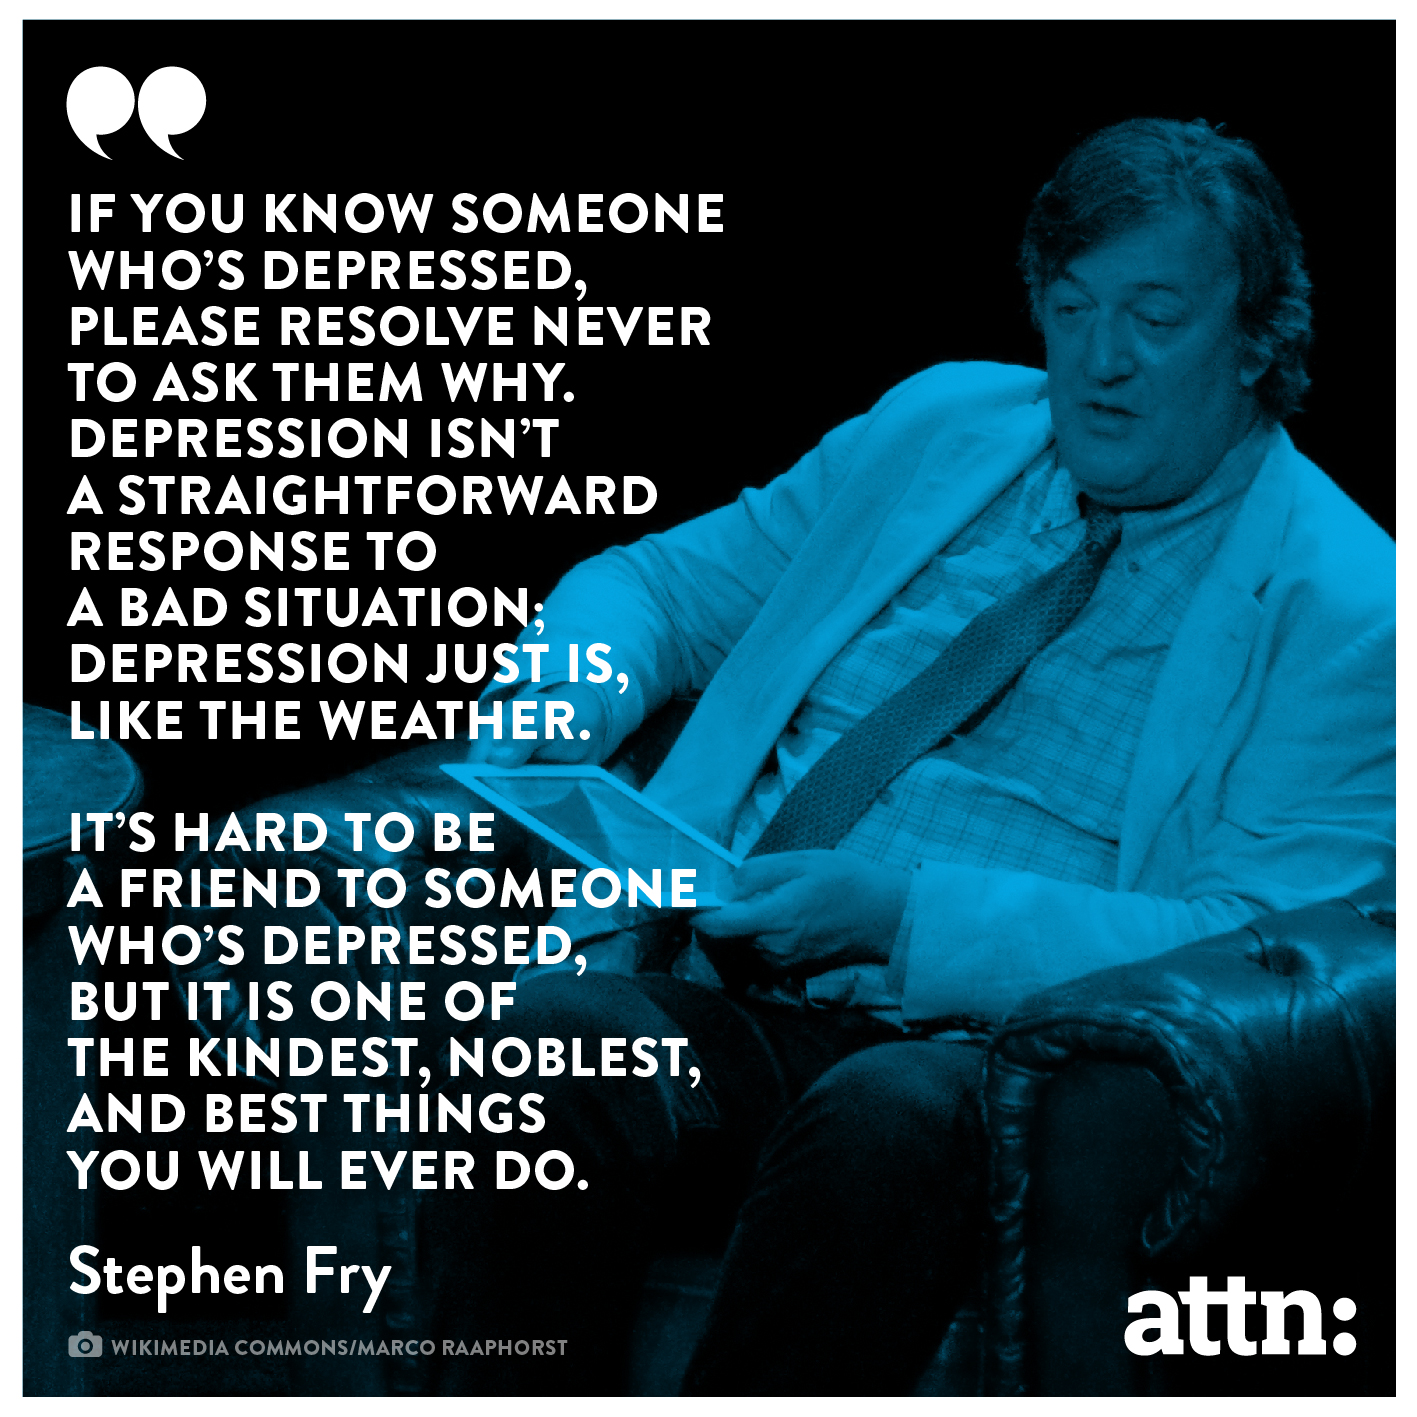 Stephen Fry mental illness